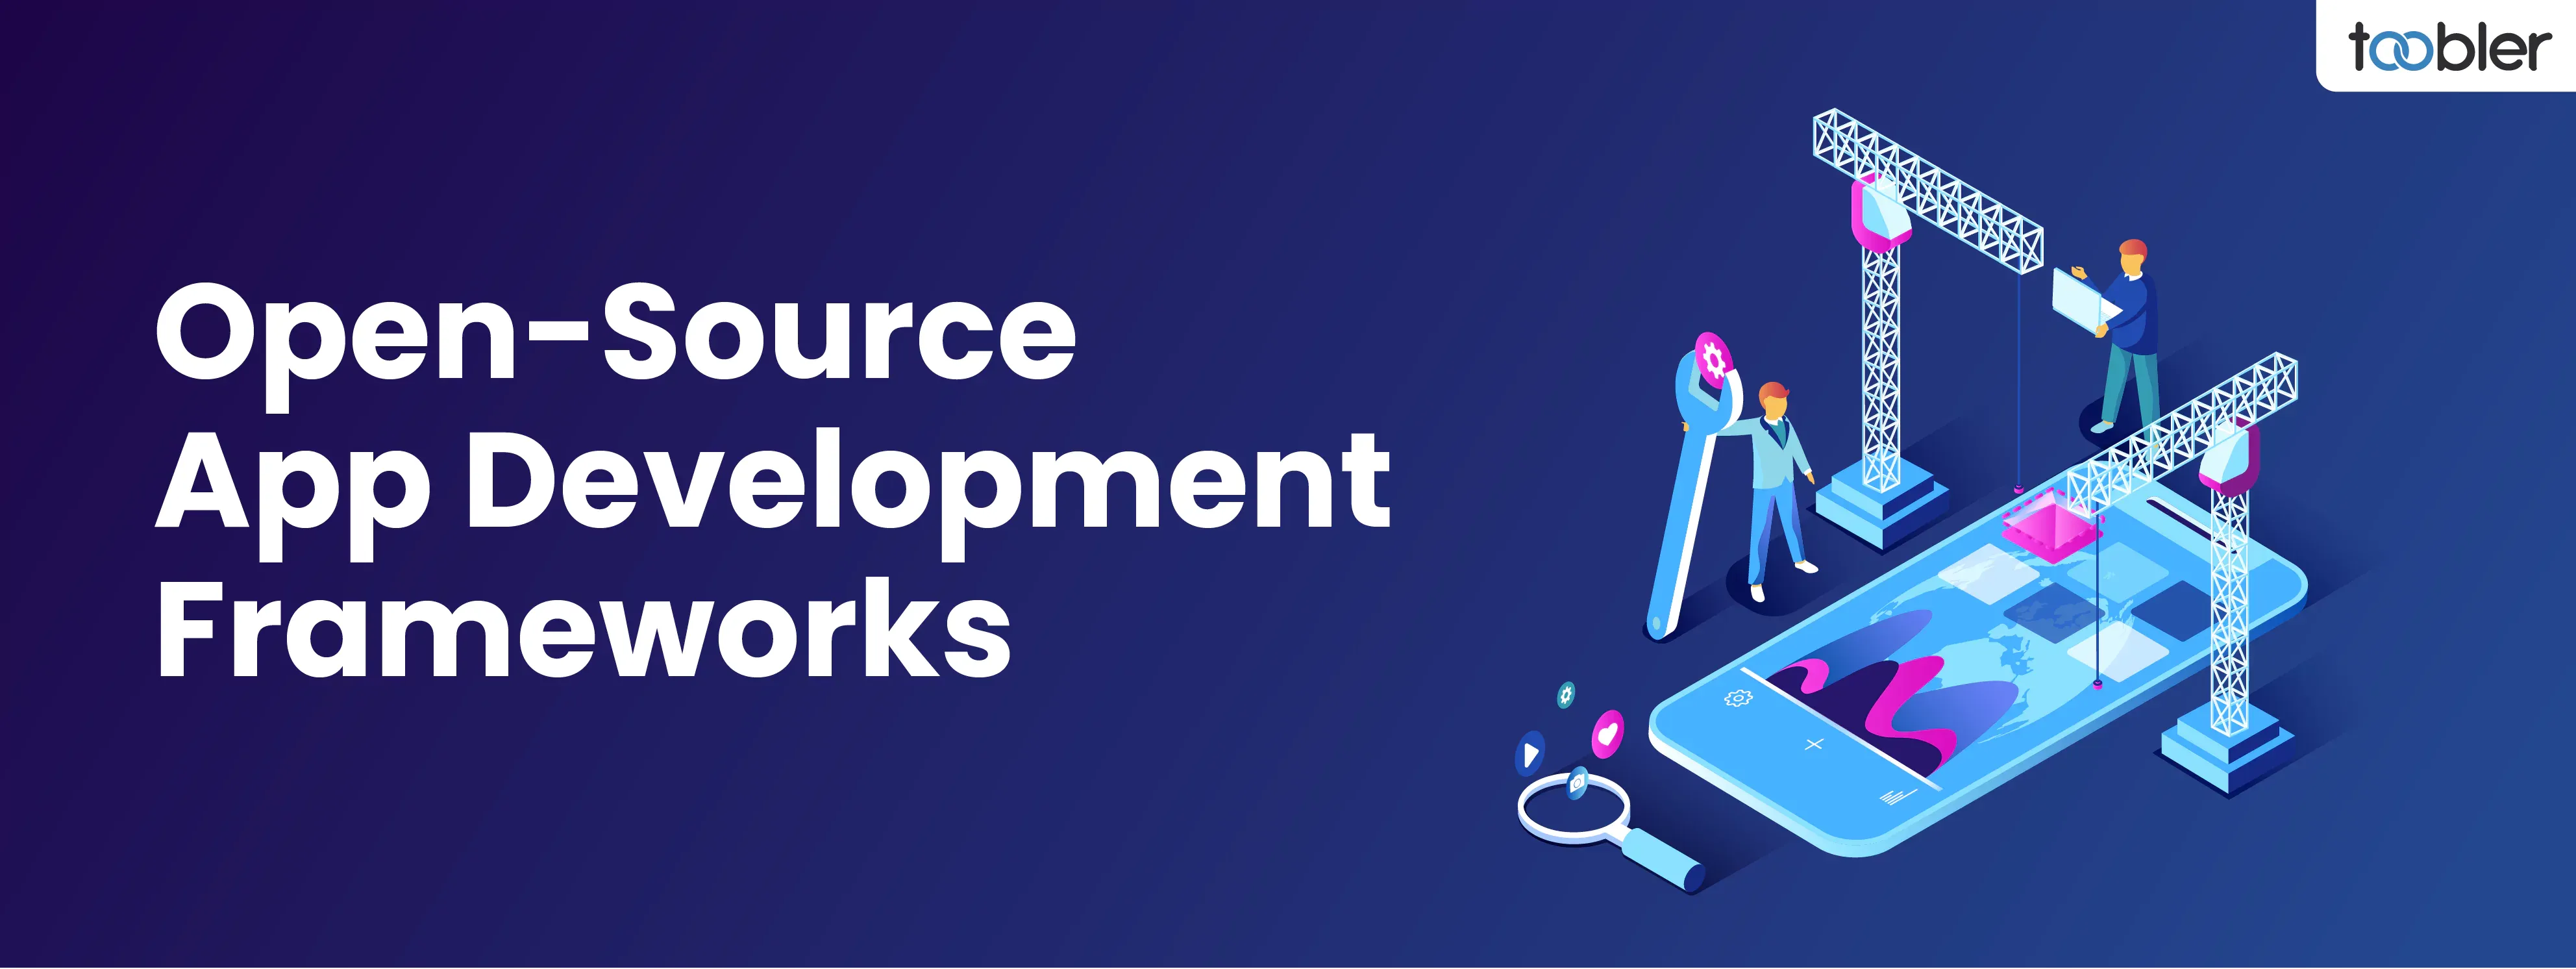 Top 10 Open-Source App Development Frameworks [Updated]